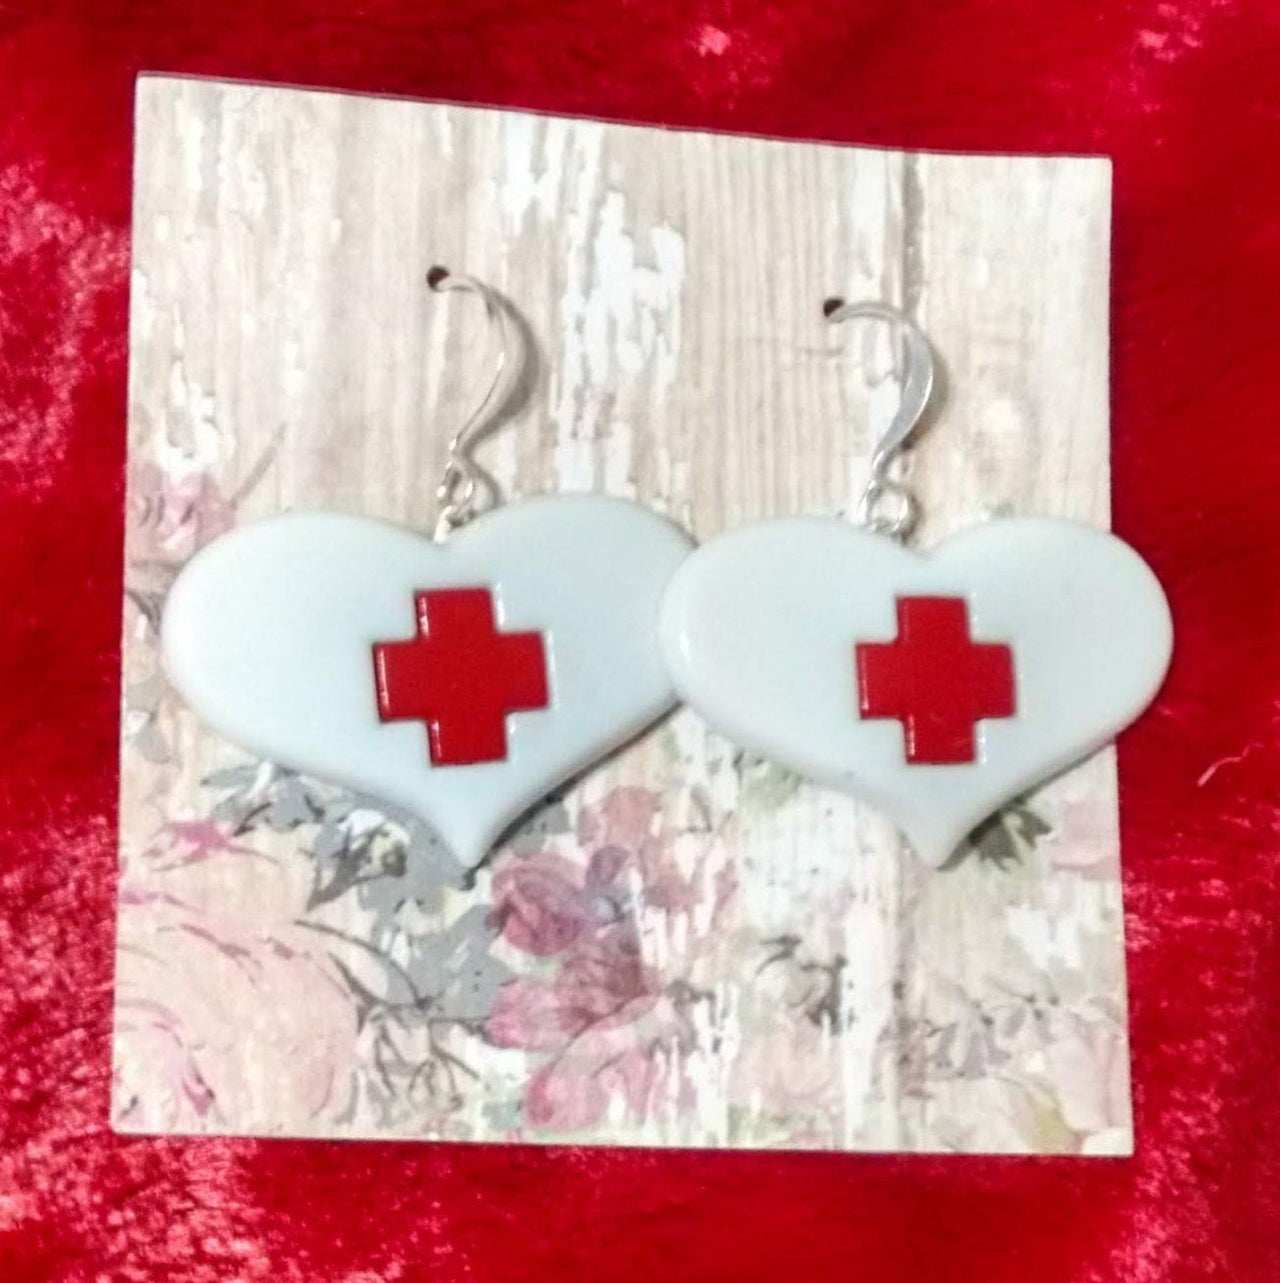 Red cross and heart earrings